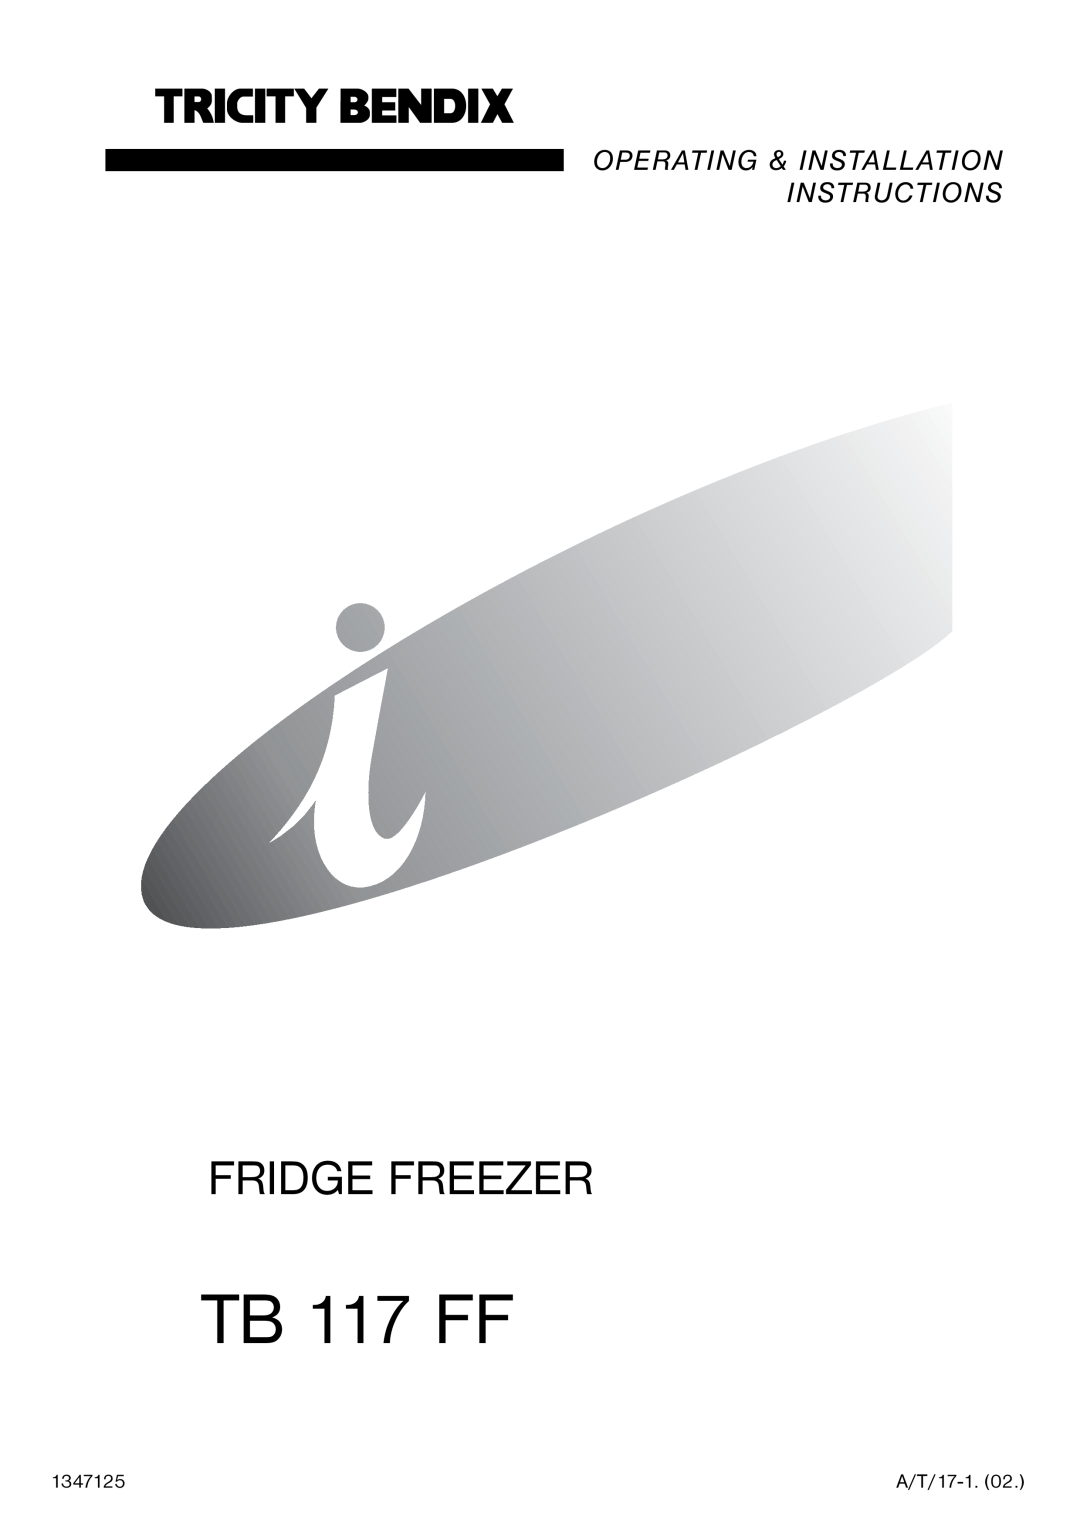 Tricity Bendix TB 117 FF installation instructions Fridge Freezer, Operating & Installation Instructions, 1347125 